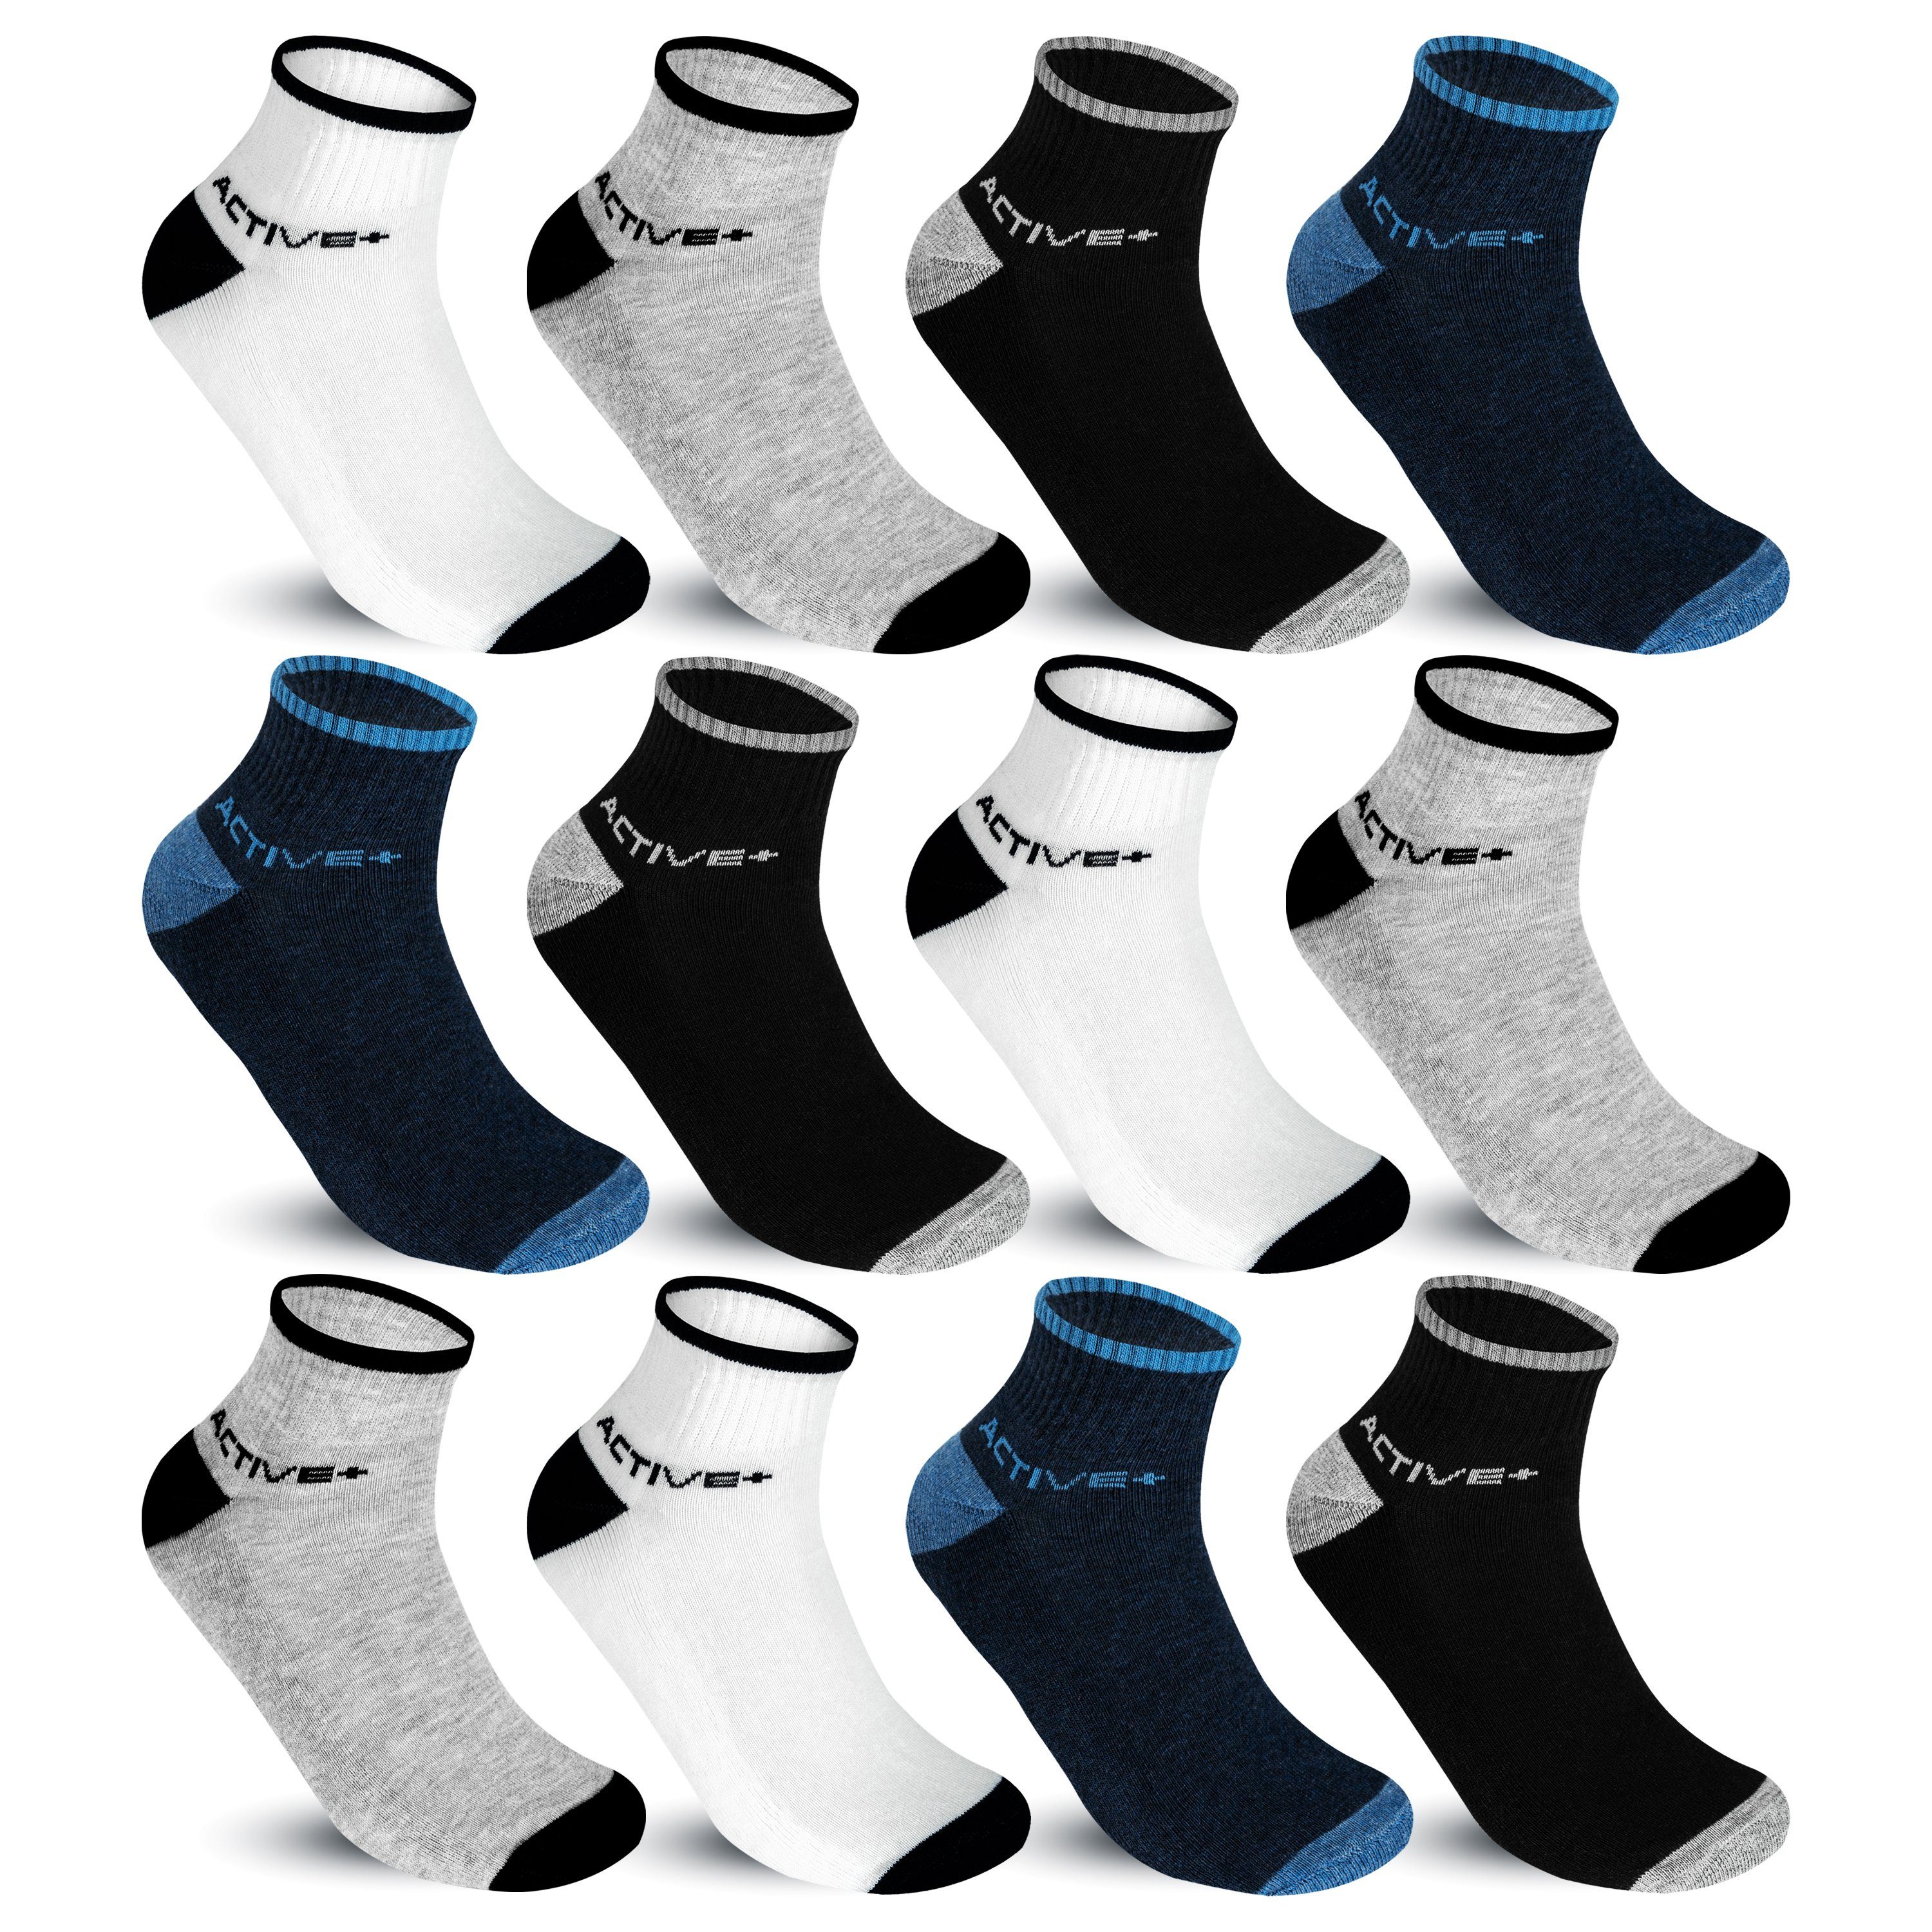 TEXEMP Laufsocken »12 Paar Frottee Socken Sneaker Herren Damen Sportsocken  Baumwolle Quarter Socks Kurzsocken Halbsocken« (Packung, 12 Paar) Frottee  Sohle online kaufen | OTTO